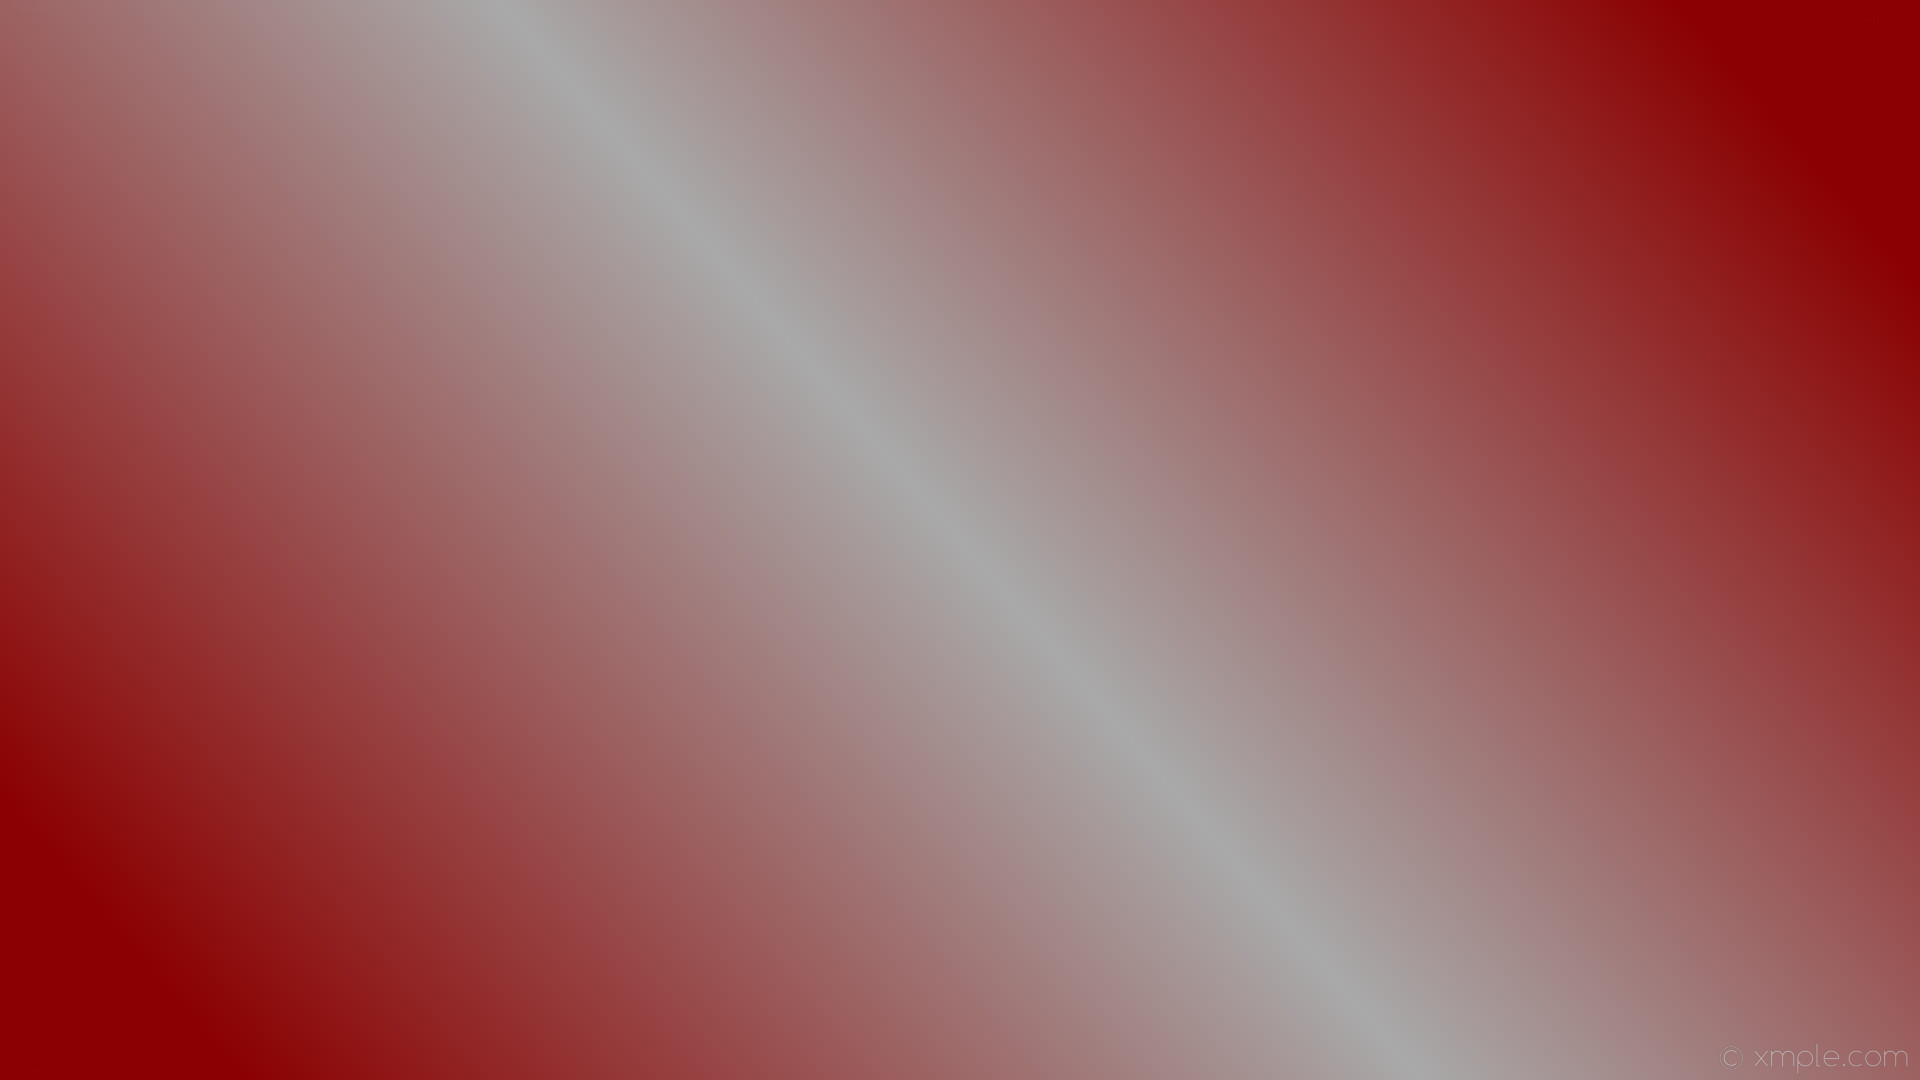 1920x1080 wallpaper red gradient linear highlight grey dark red dark gray #8b0000  #a9a9a9 15Â°